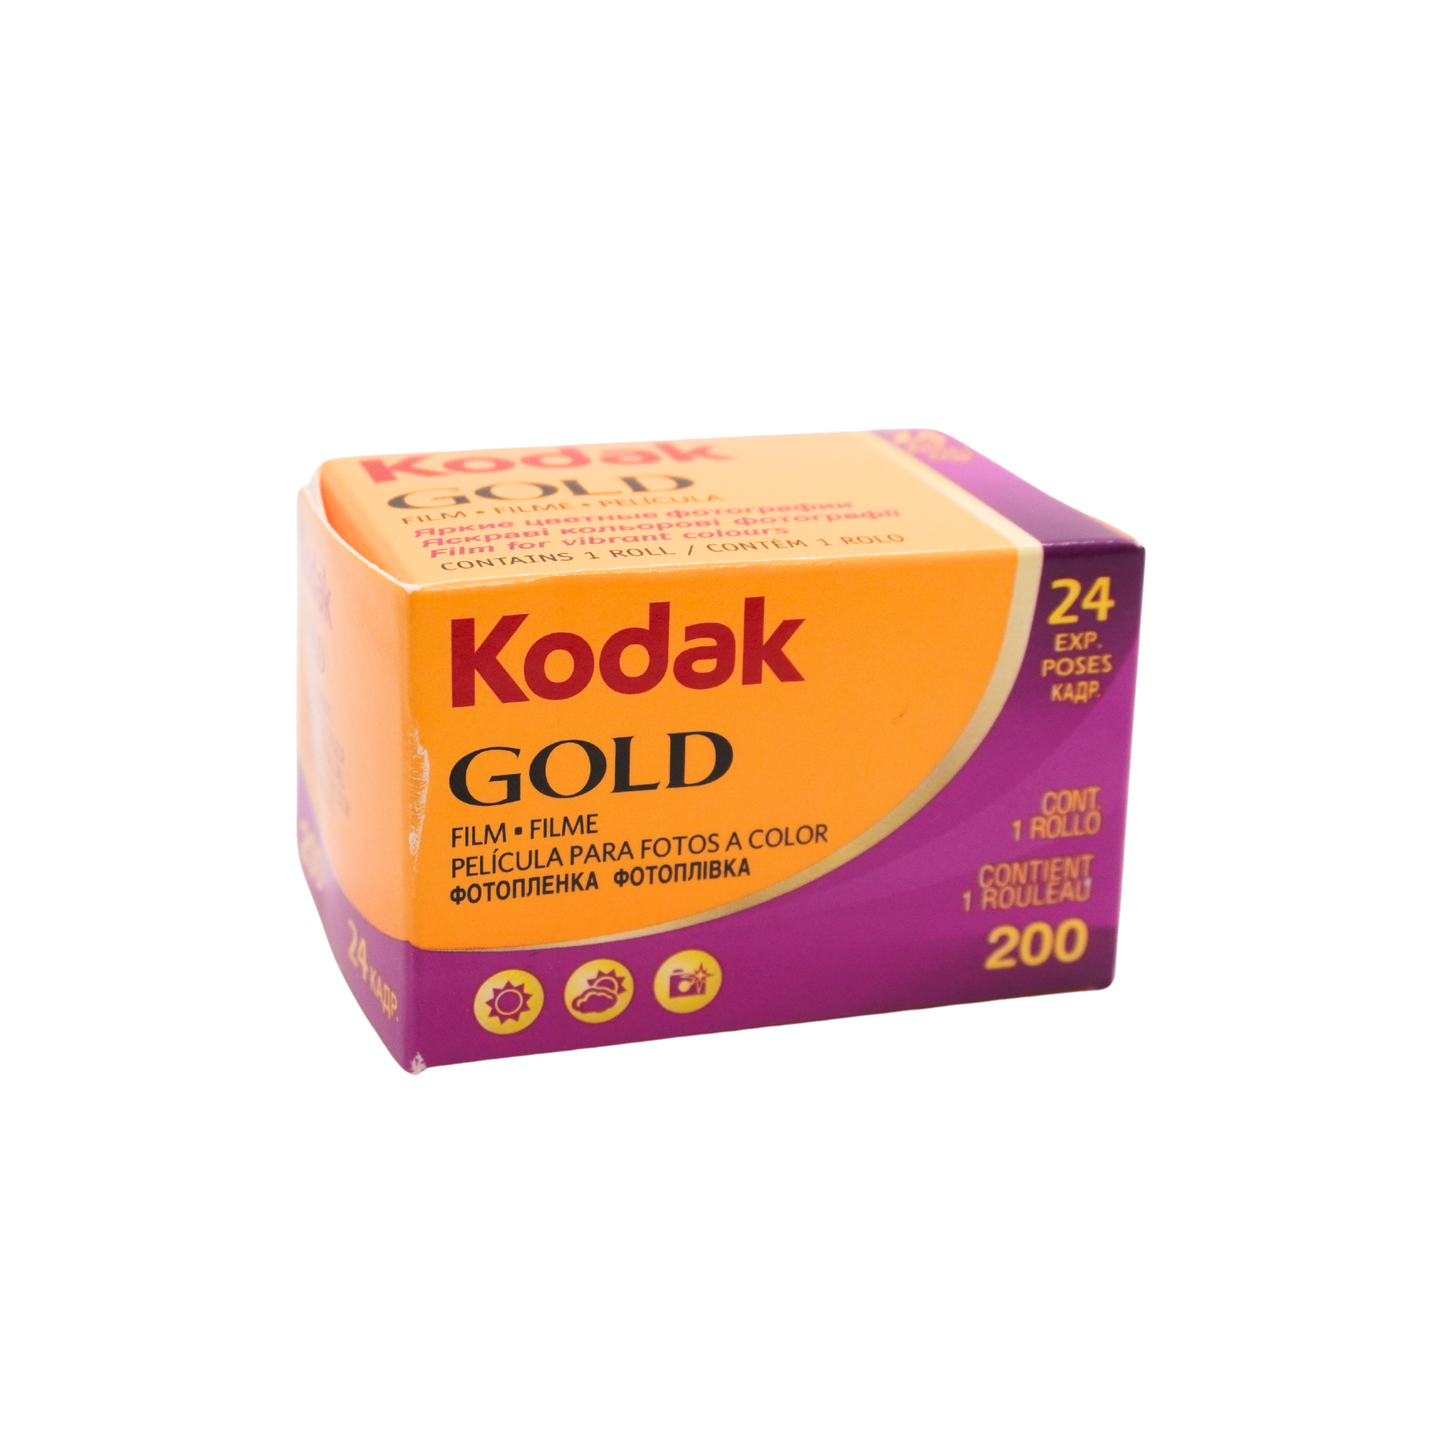 Kodak Gold 200 24exp 35mm Color Expired Film (2016/09)